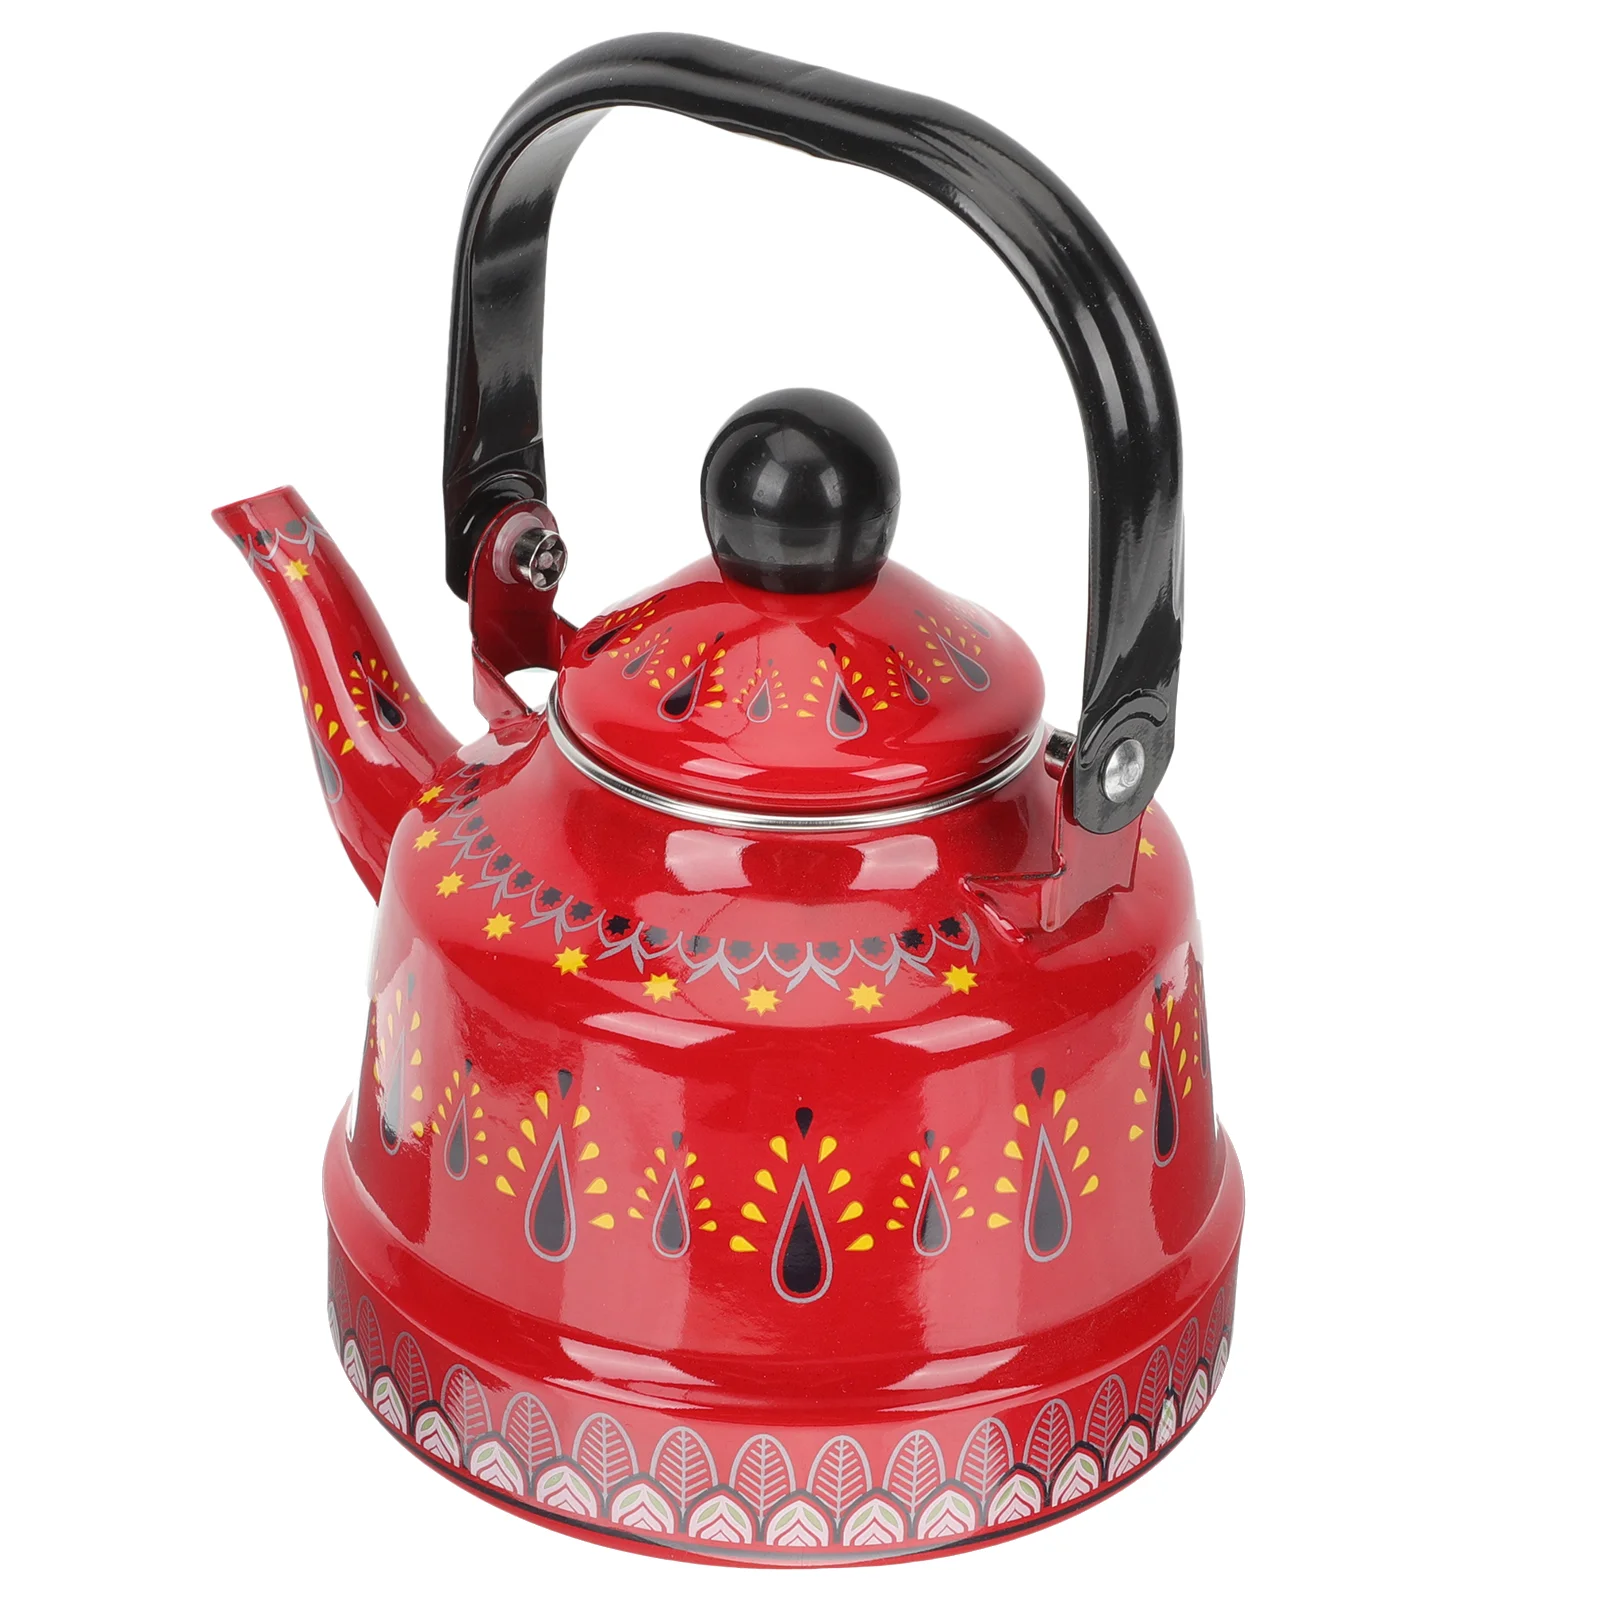 

Kettle Tea Teapot Water Pot Enamel Stovetop Whistling Office Coffee The Stove Ceramic Merchandise Boiling Vintage Teakettle